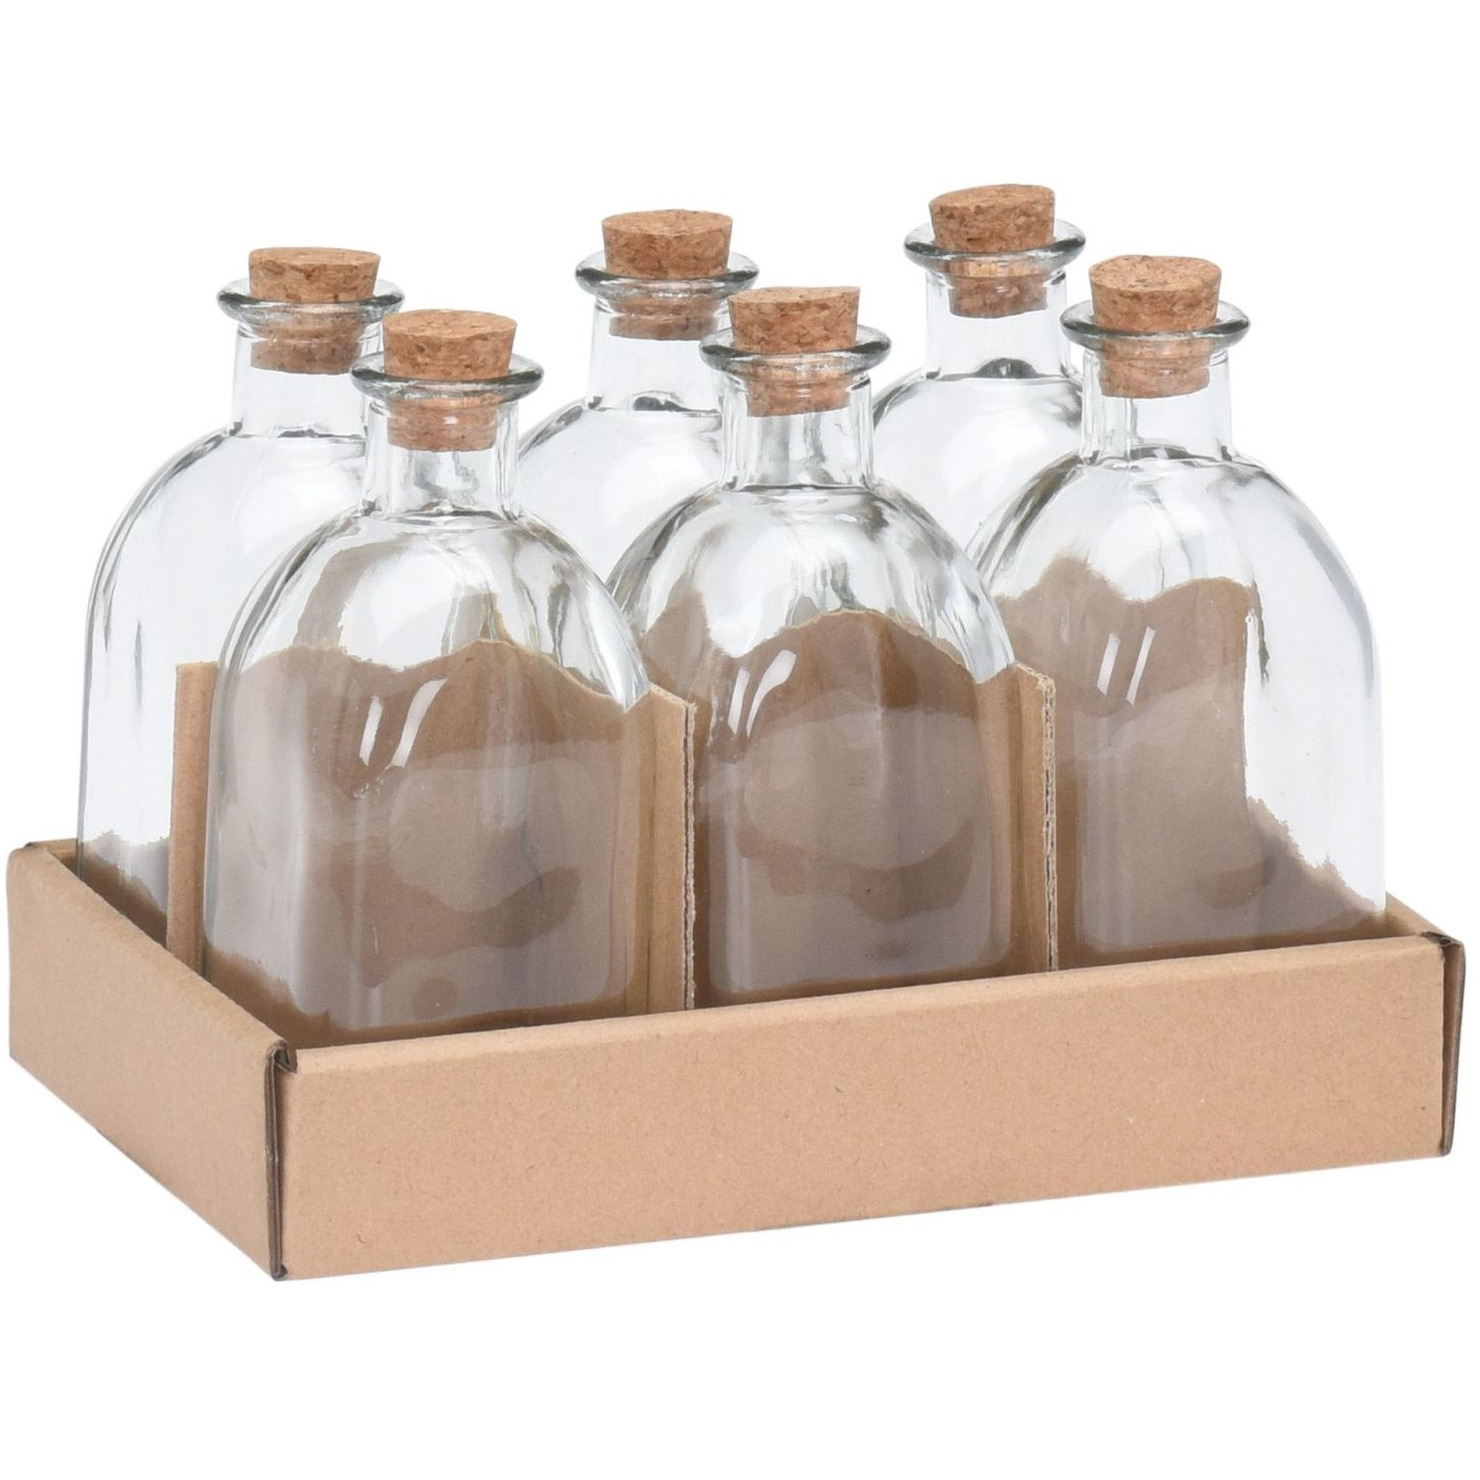 Glazen flesjes met kurk dop - 6x stuks - transparant - glas - 250 ml